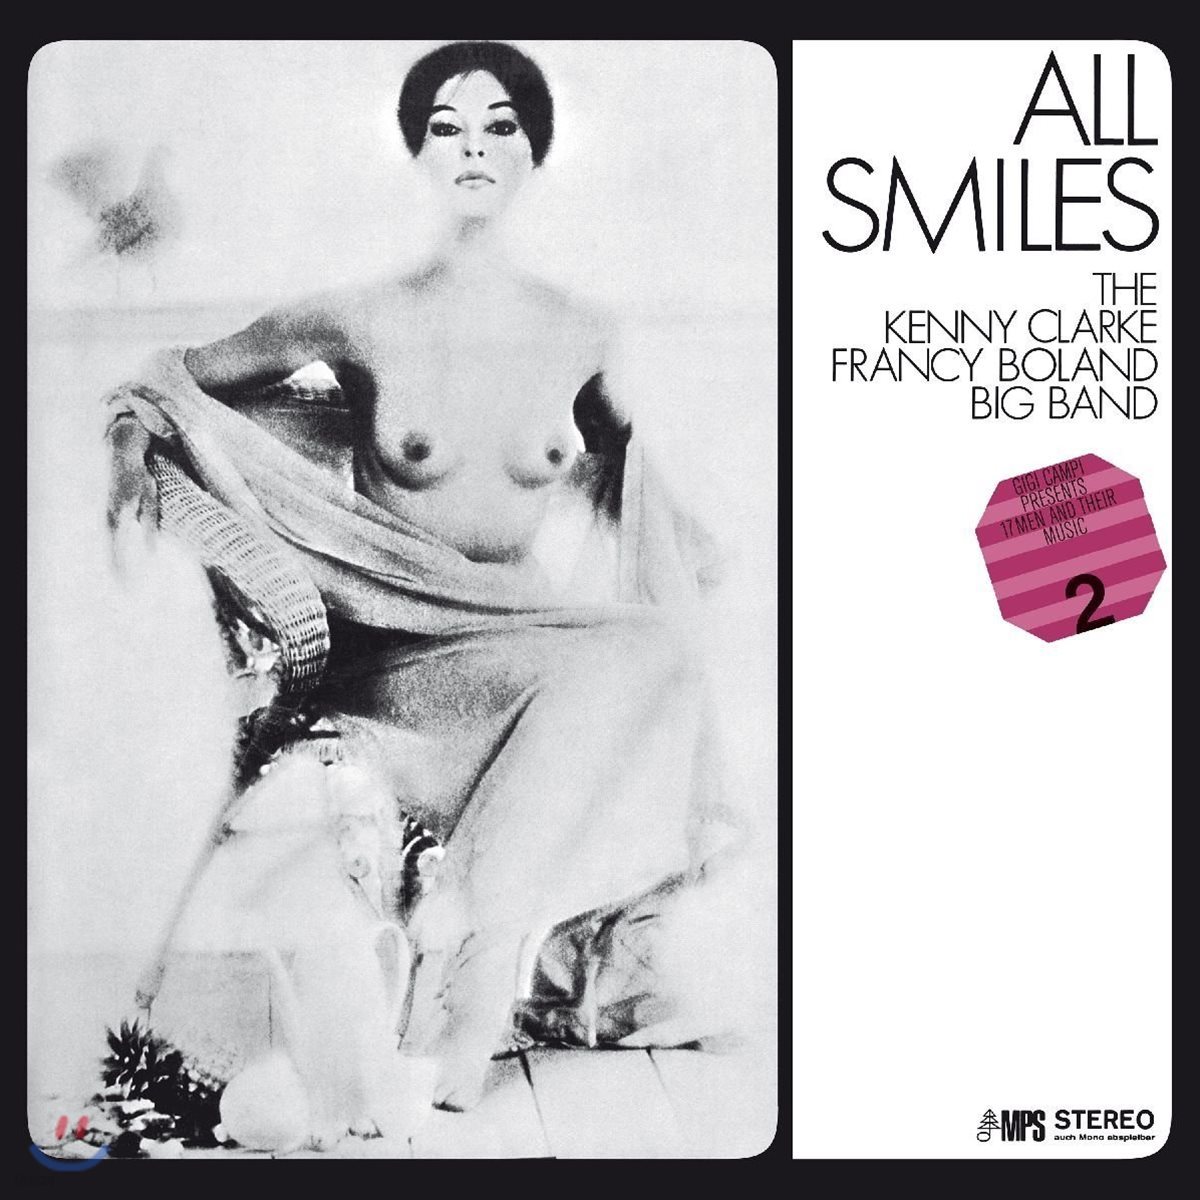 Kenny Clarke Francy Boland Big Band (케니 클락 프랜시 볼랜드 빅 밴드) - All Smiles [LP]